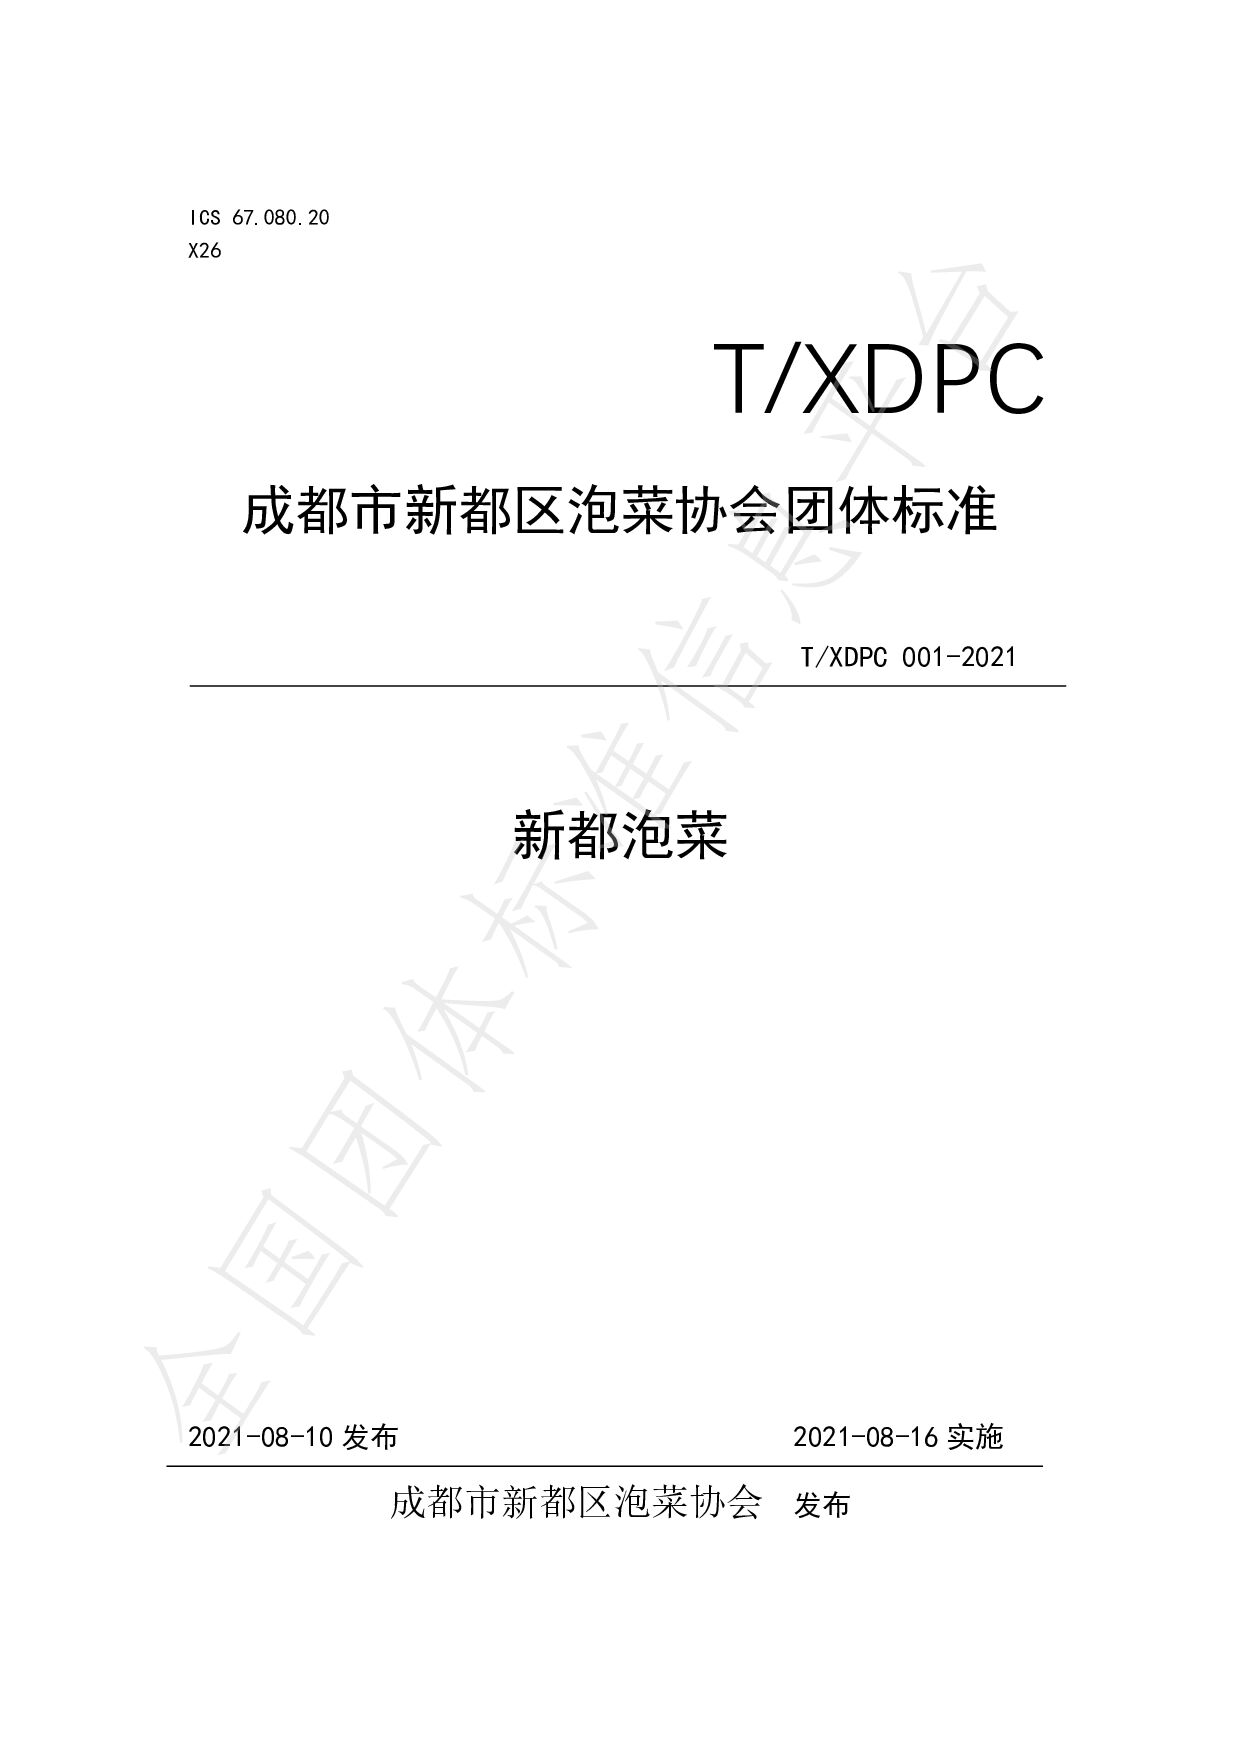 T/XDPC 001-2021封面图